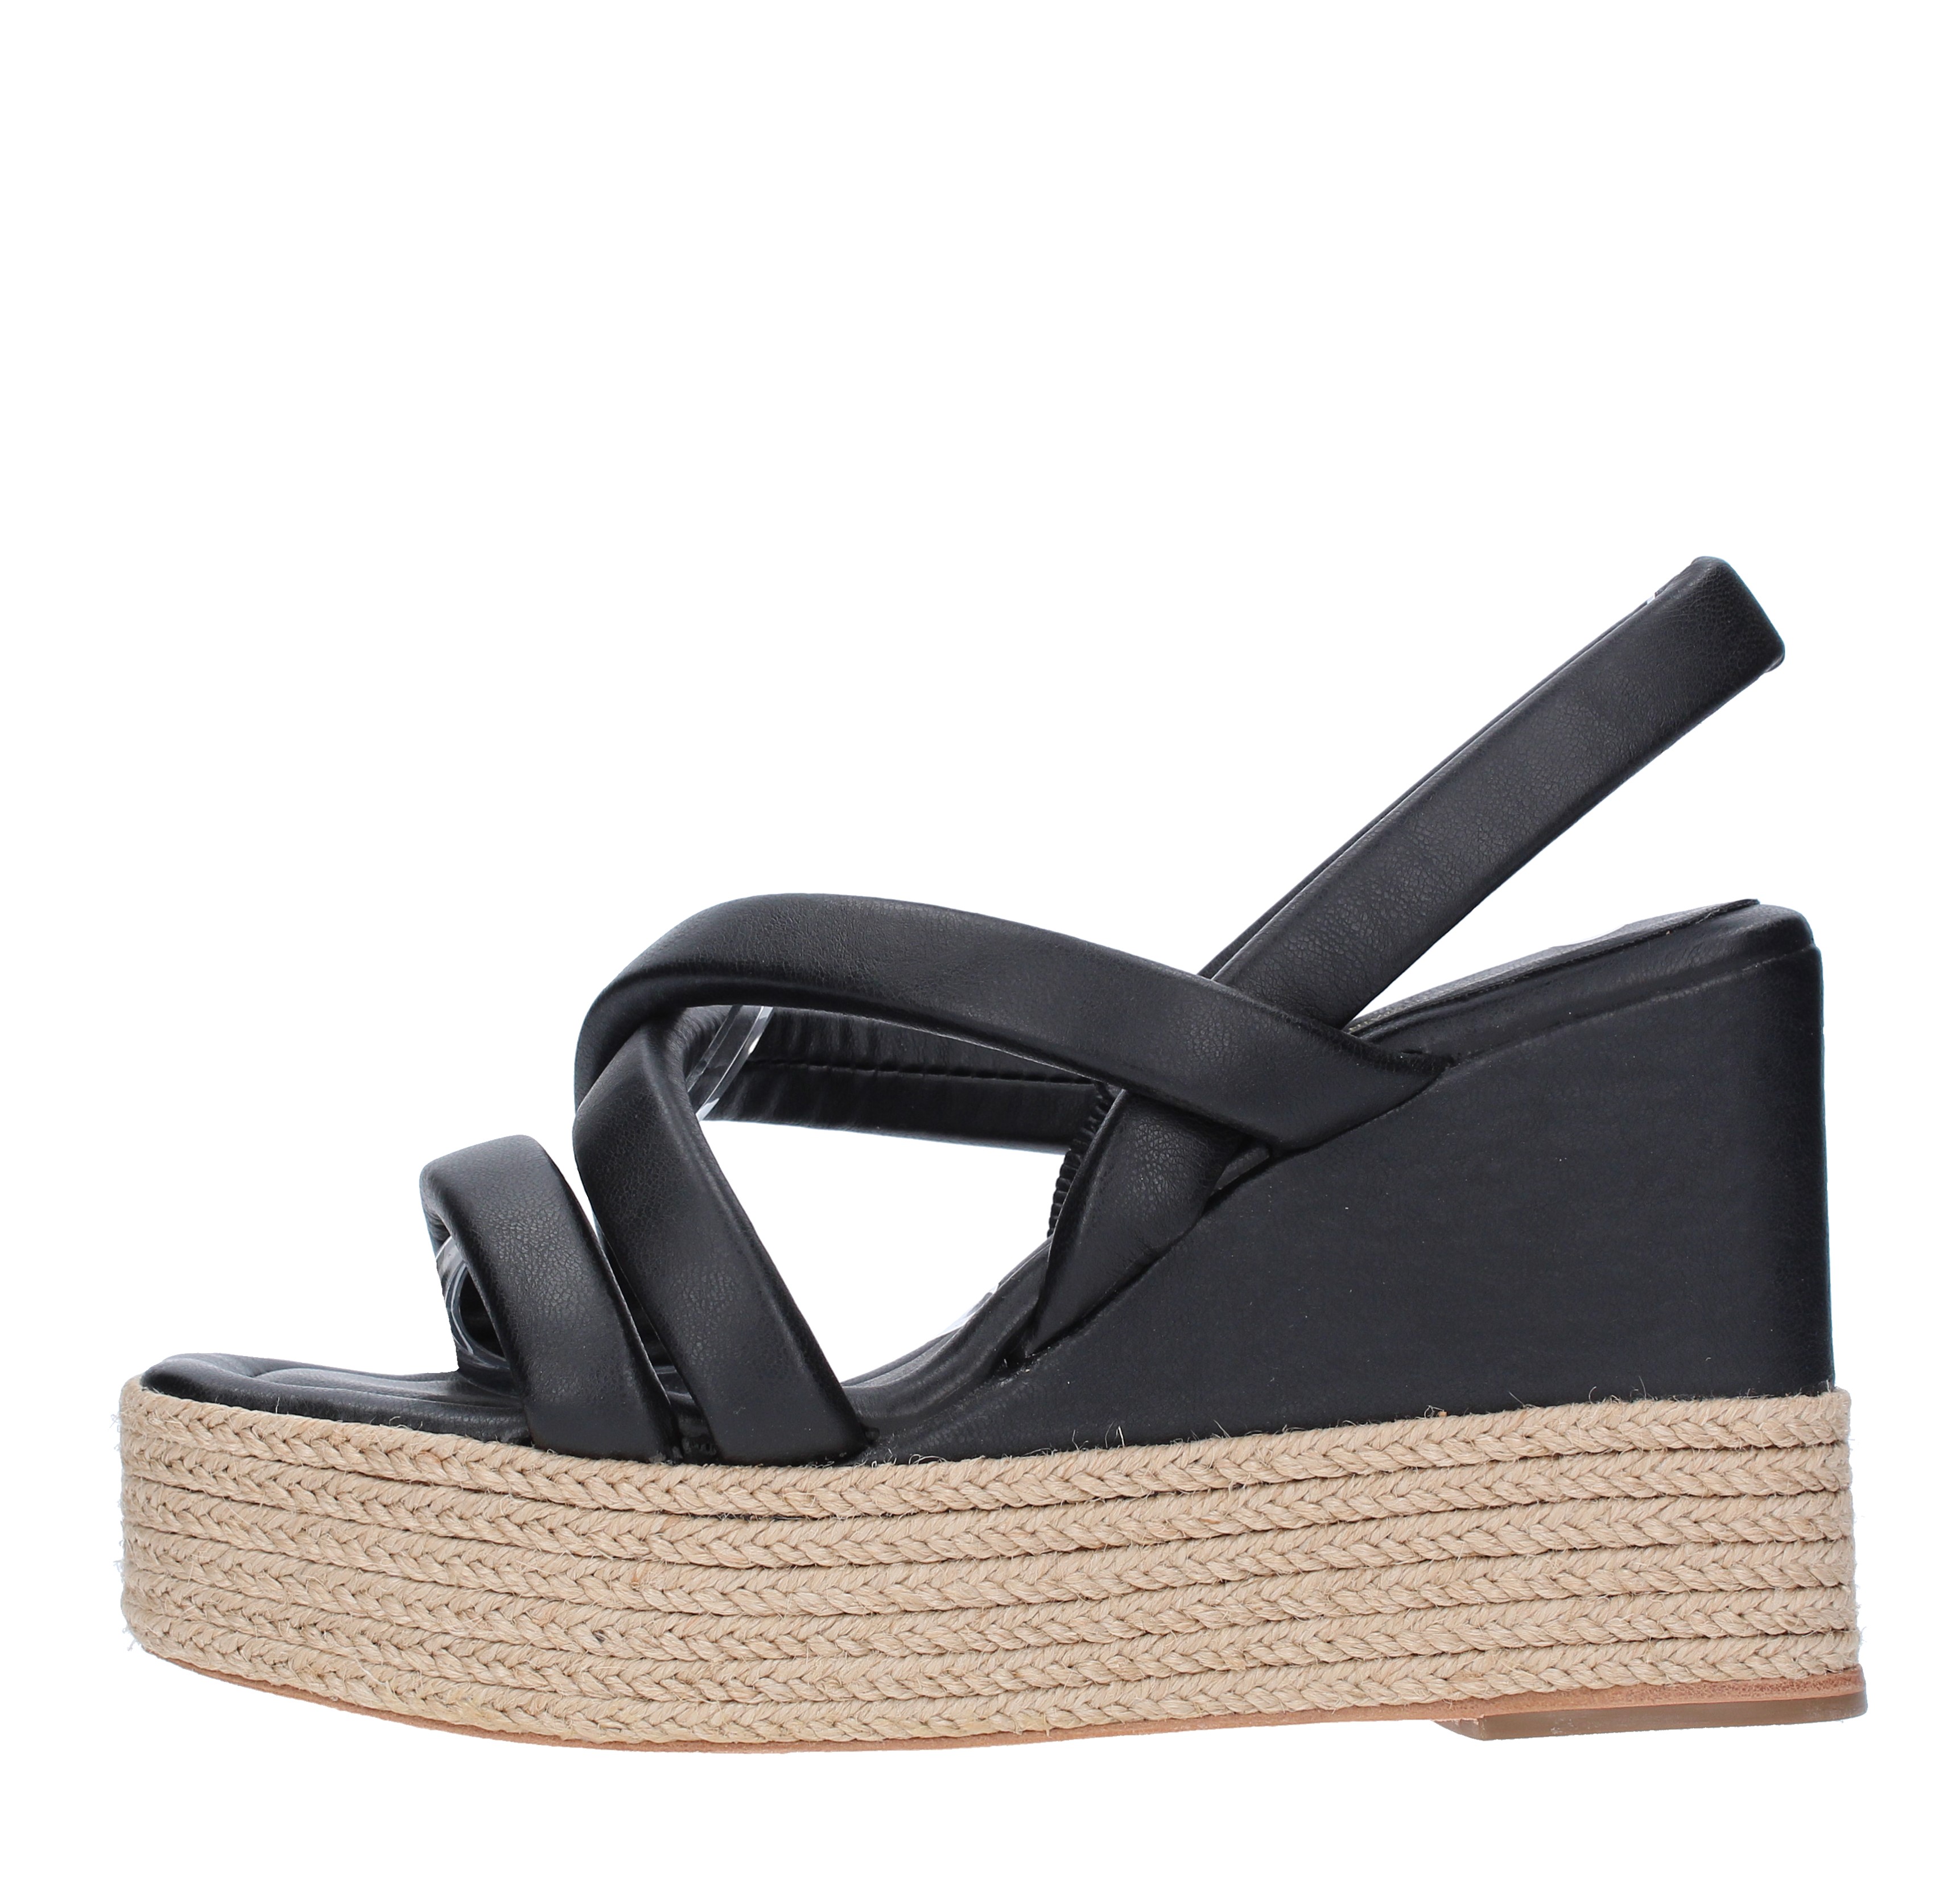 Nappa leather wedge sandals - PALOMA BARCELO' - Ginevra calzature